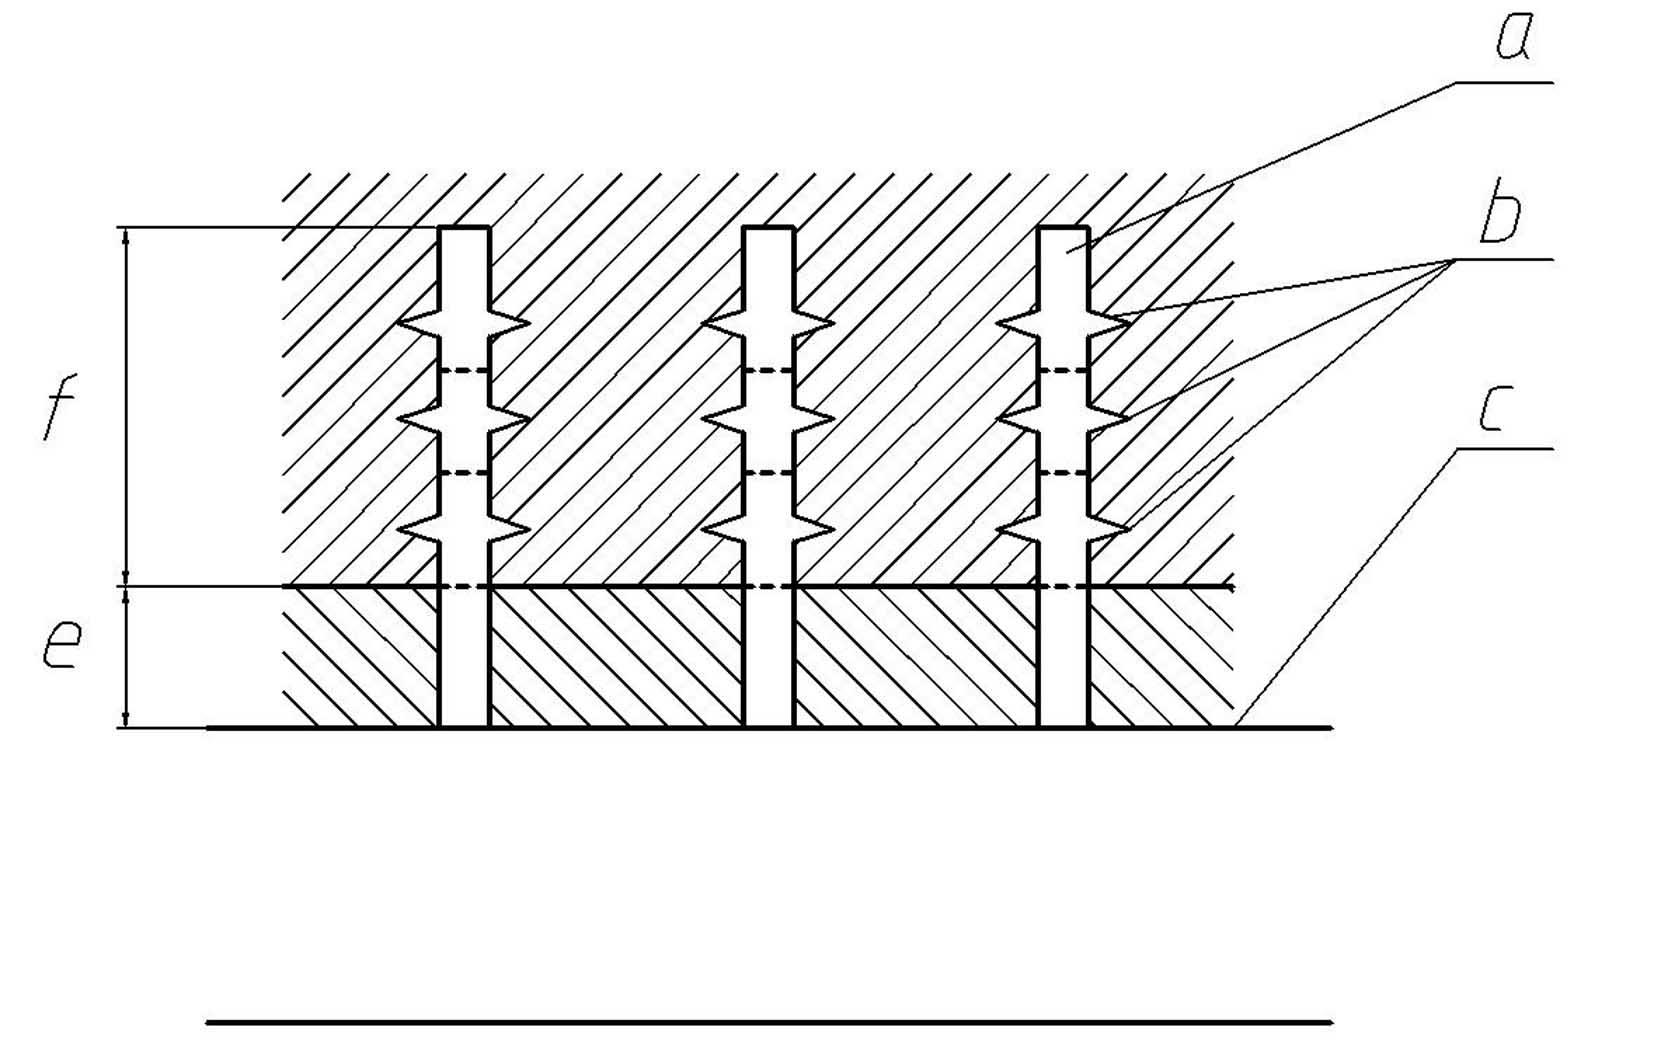 Stratified blasting method for coal mine hard roof